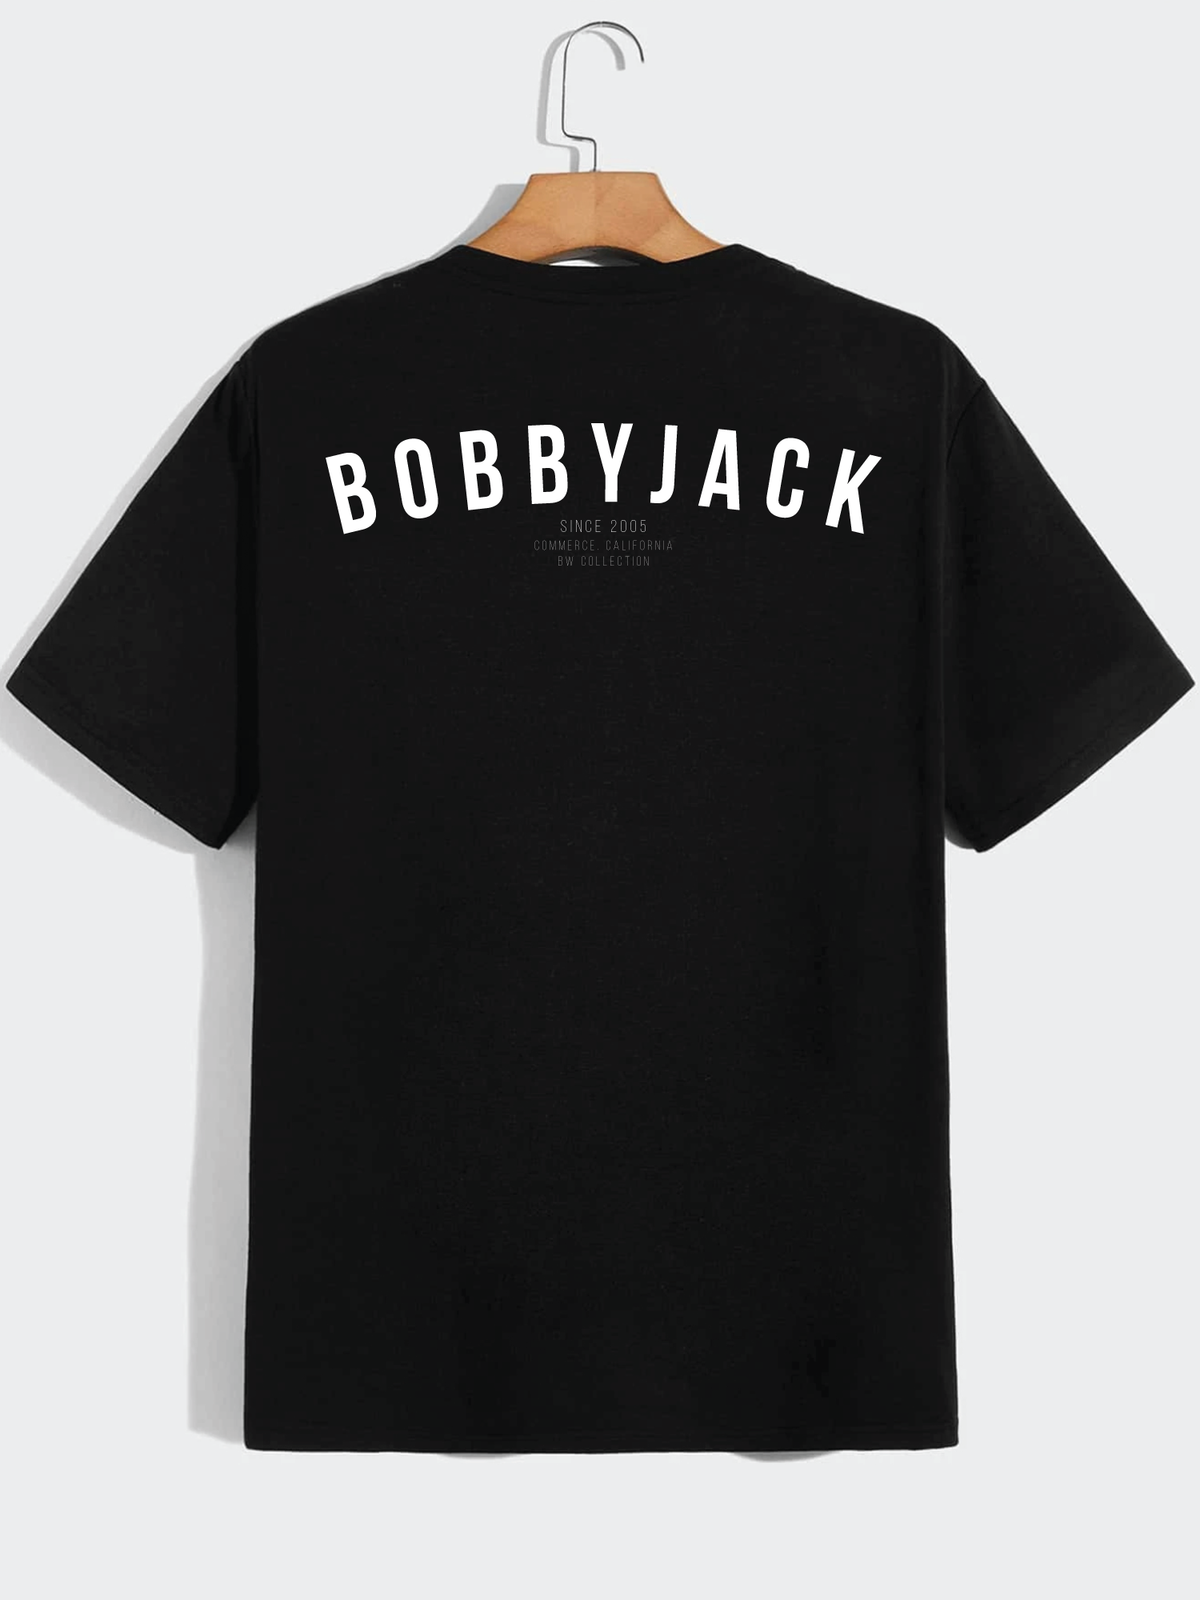 Don't Burst My Bubble  - Bobby Jack Men HW Shirt - Black